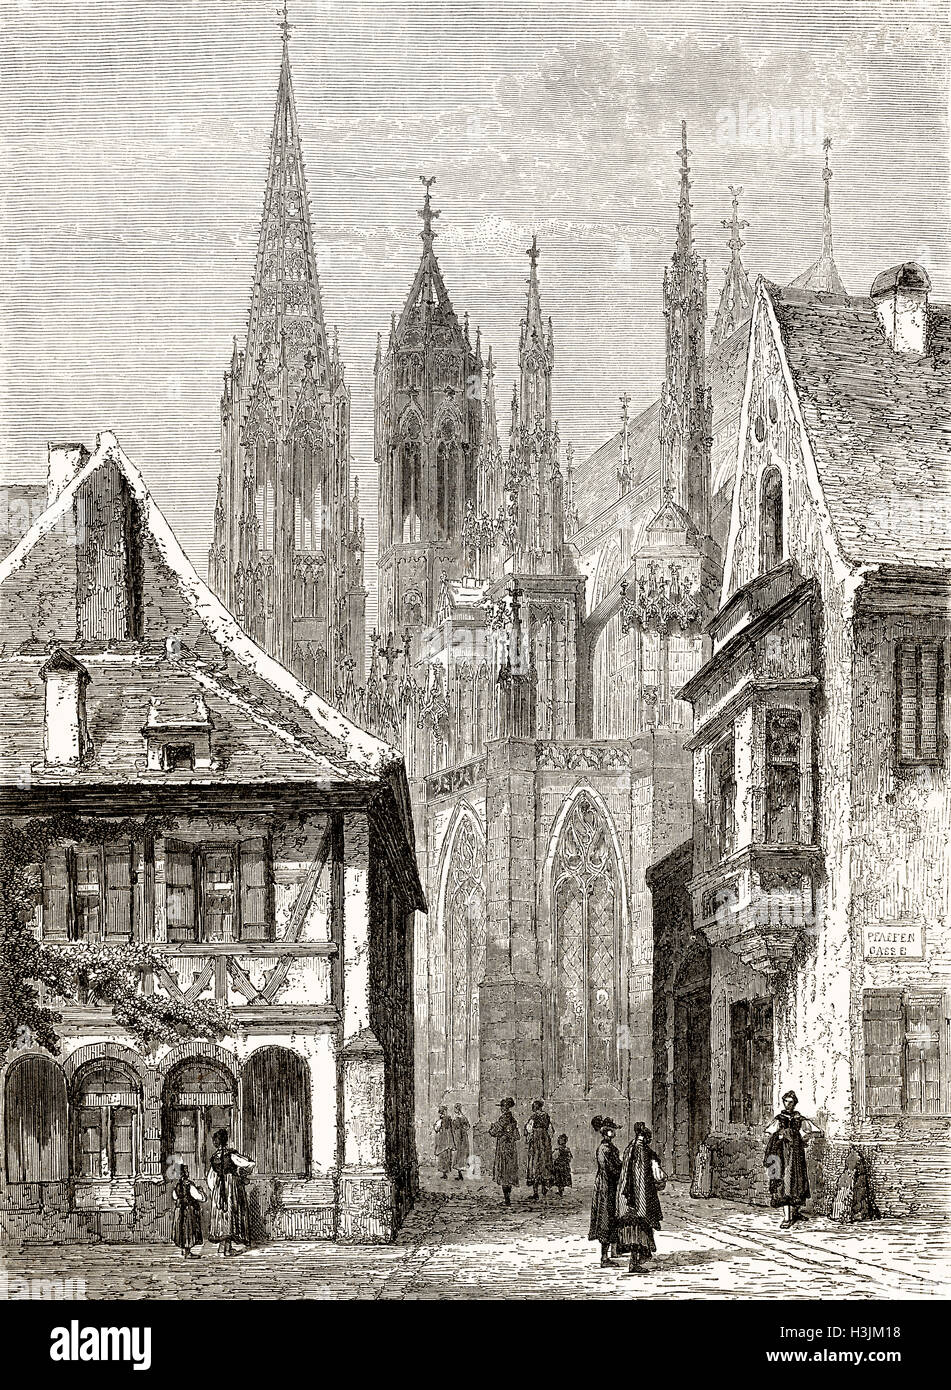 Freiburg im Breisgau, Bade-Wurtemberg, Allemagne, 19e siècle Banque D'Images